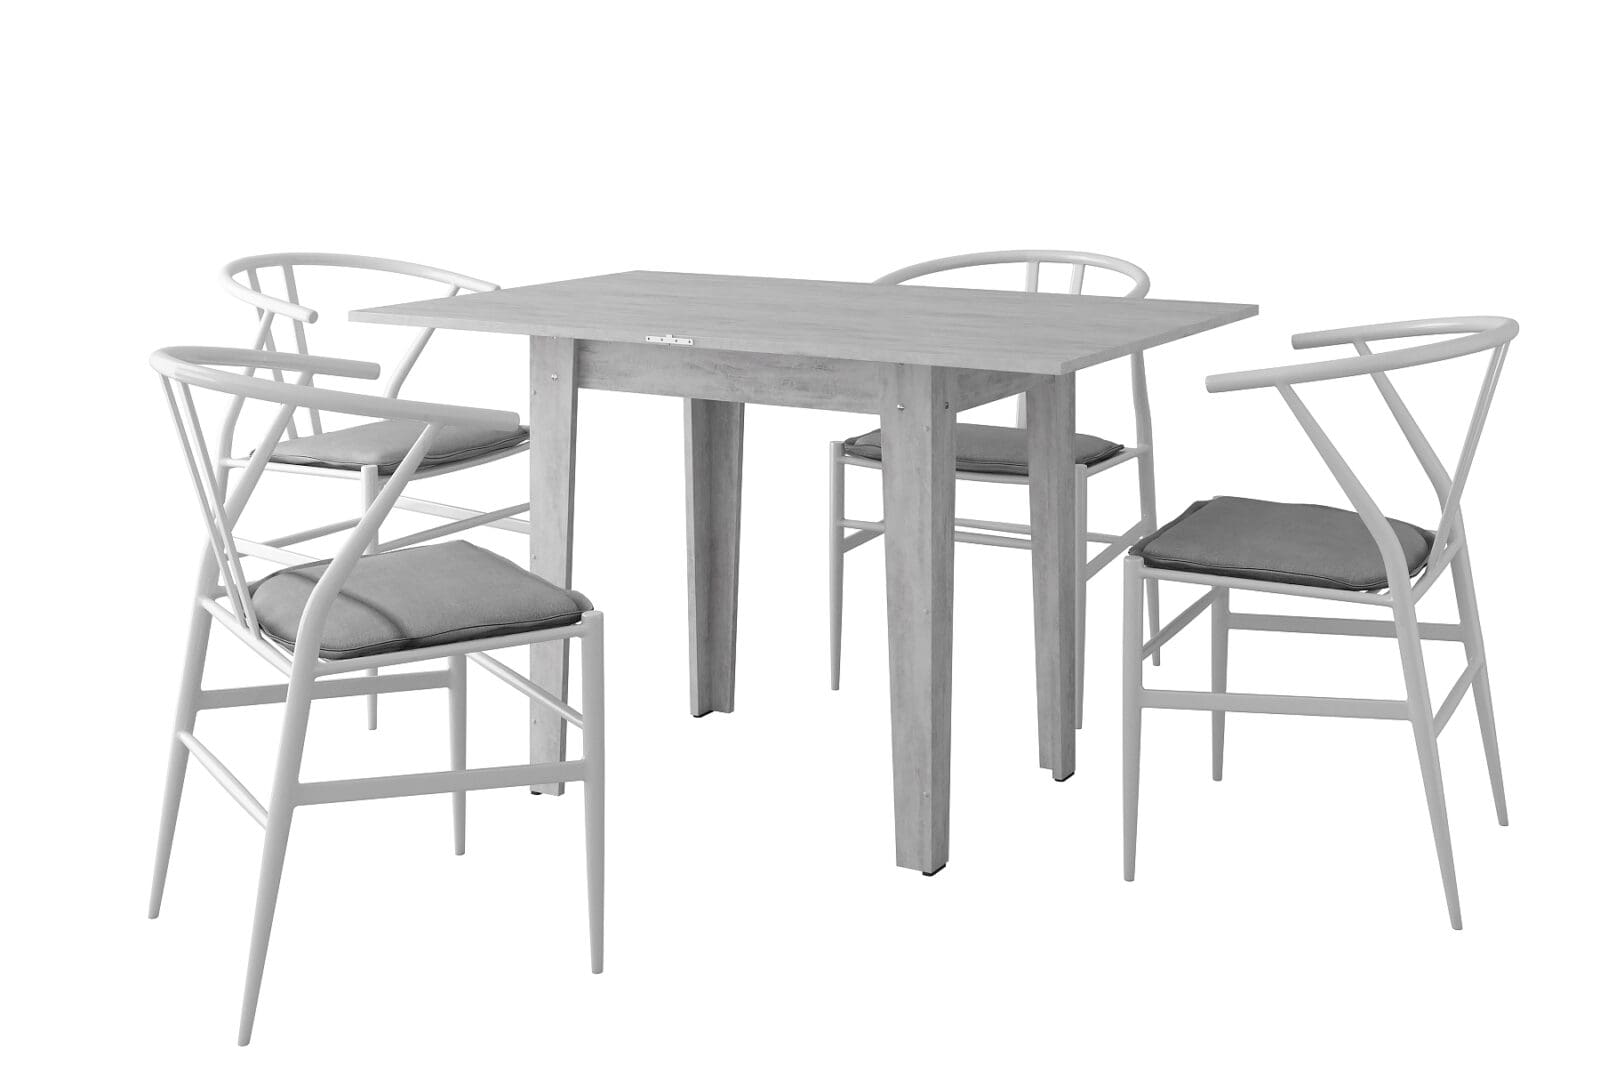 table transformer gray concrete